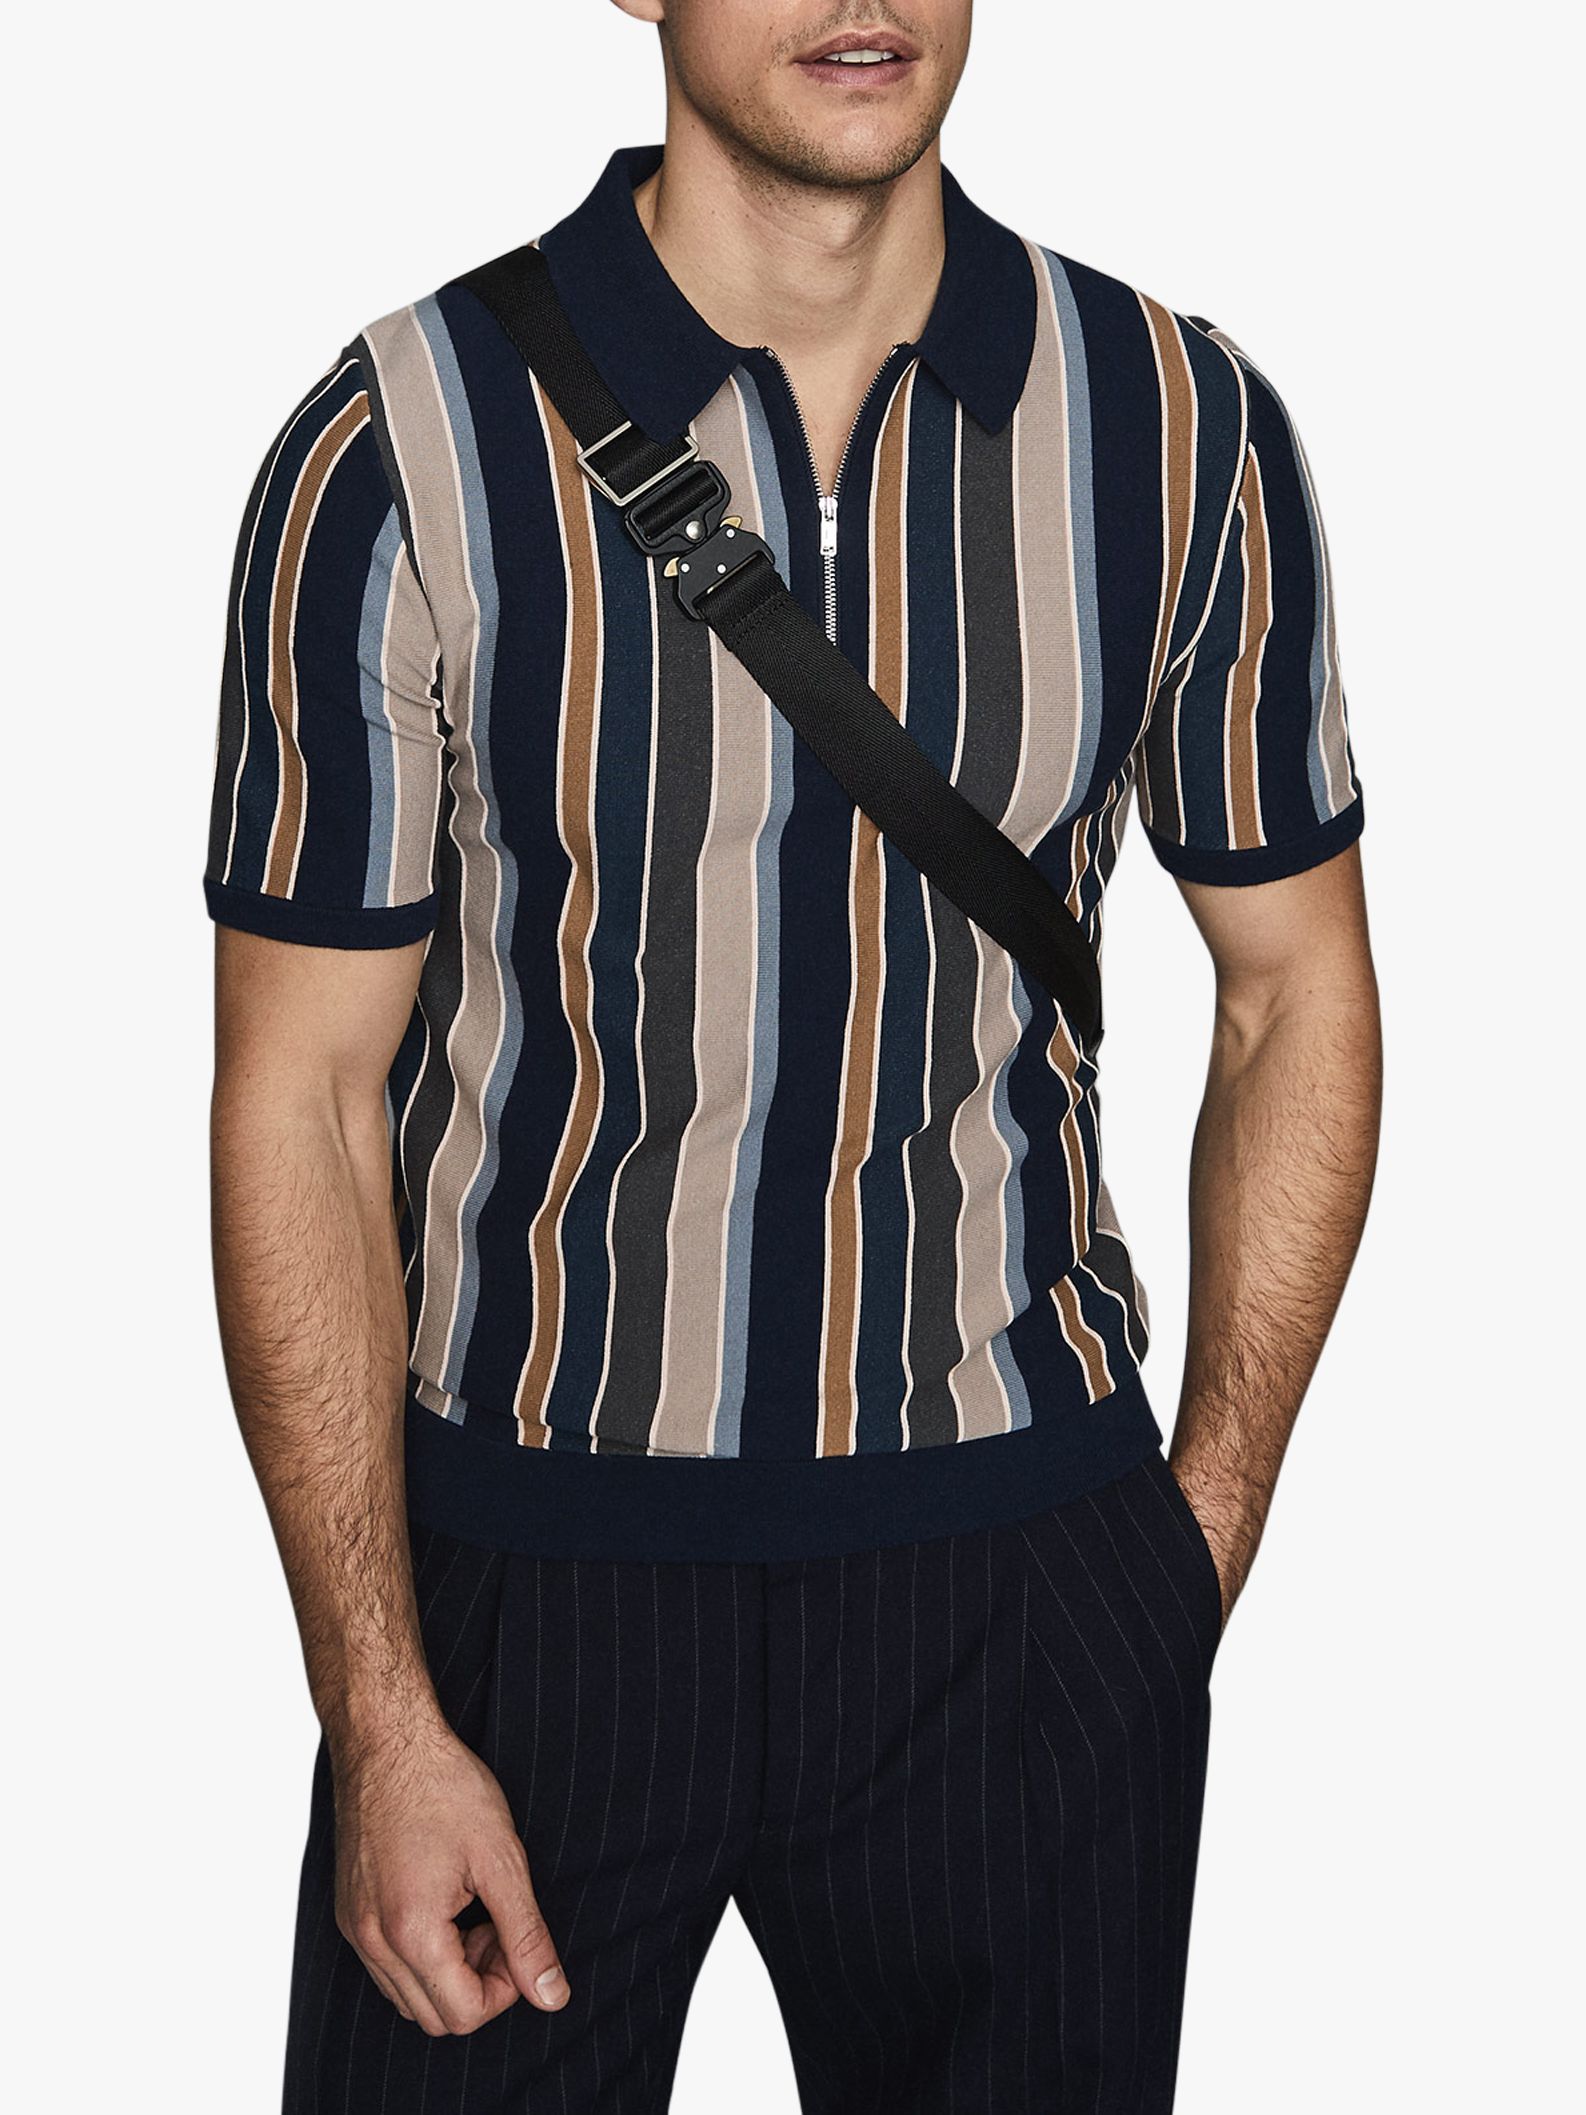 Reiss Princeton Stripe Zip Neck Polo Shirt, Blue at John Lewis & Partners